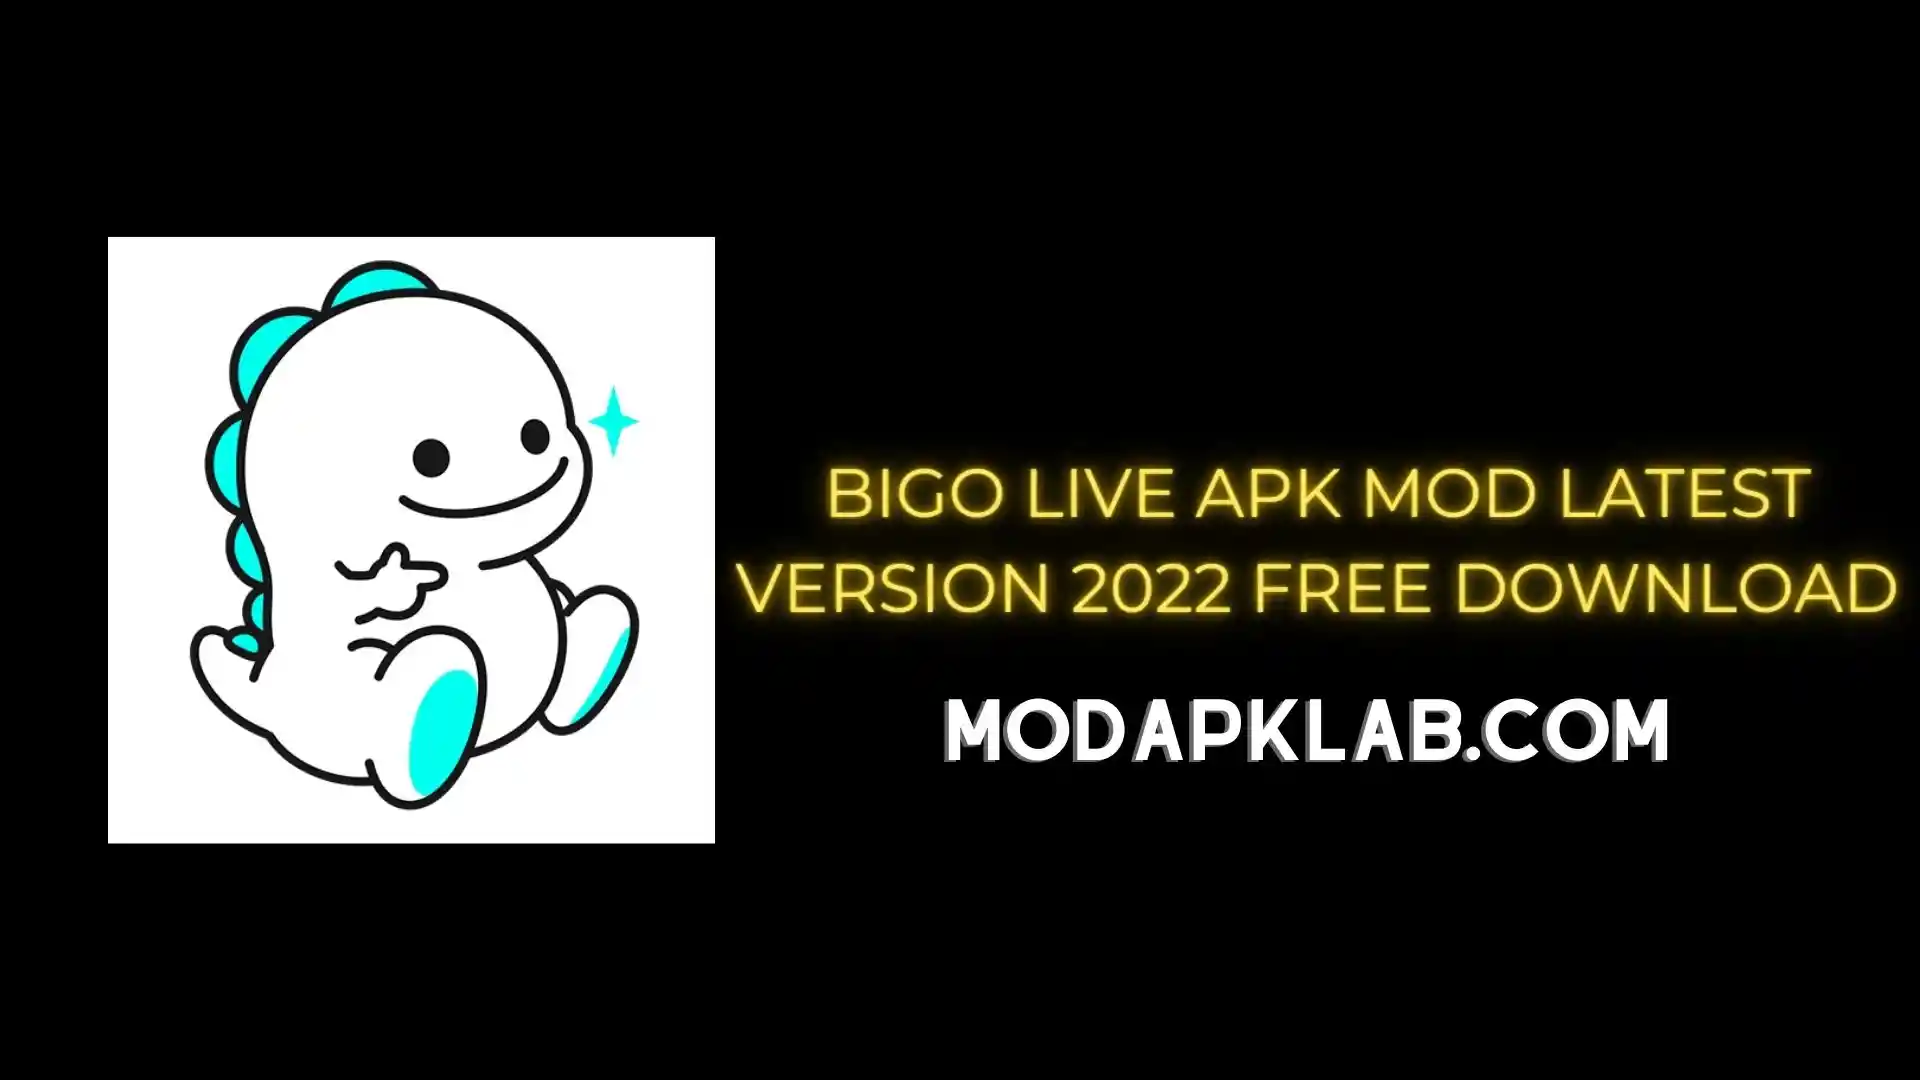 Bigo Live Mod Apk Latest Version 2022 Free Download